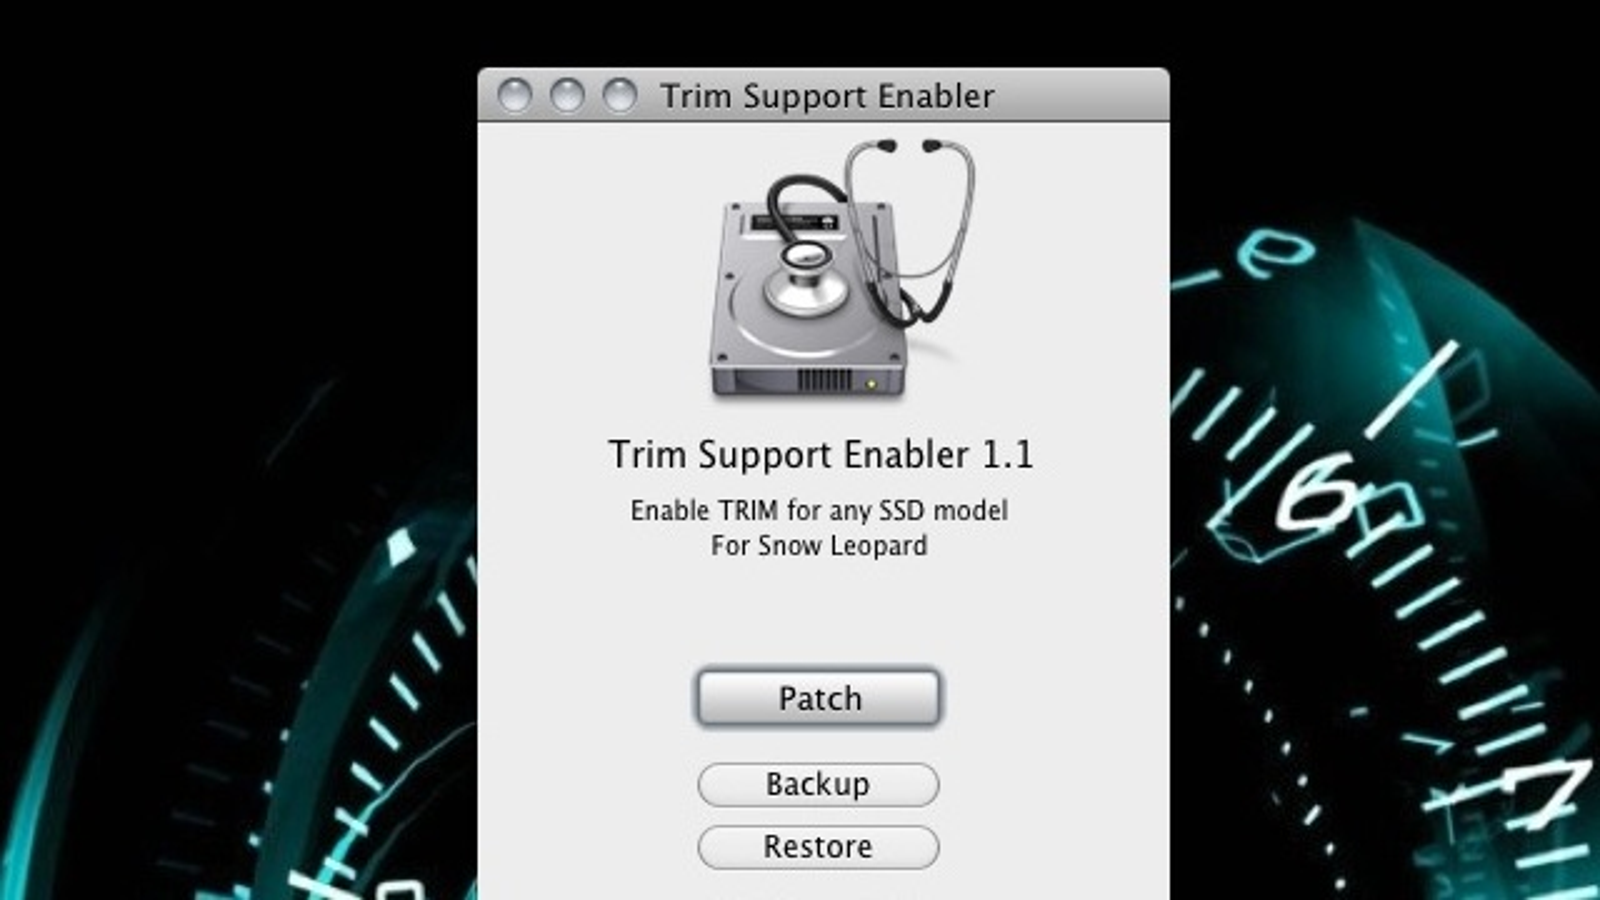 enable trim mac os x 10.7.5